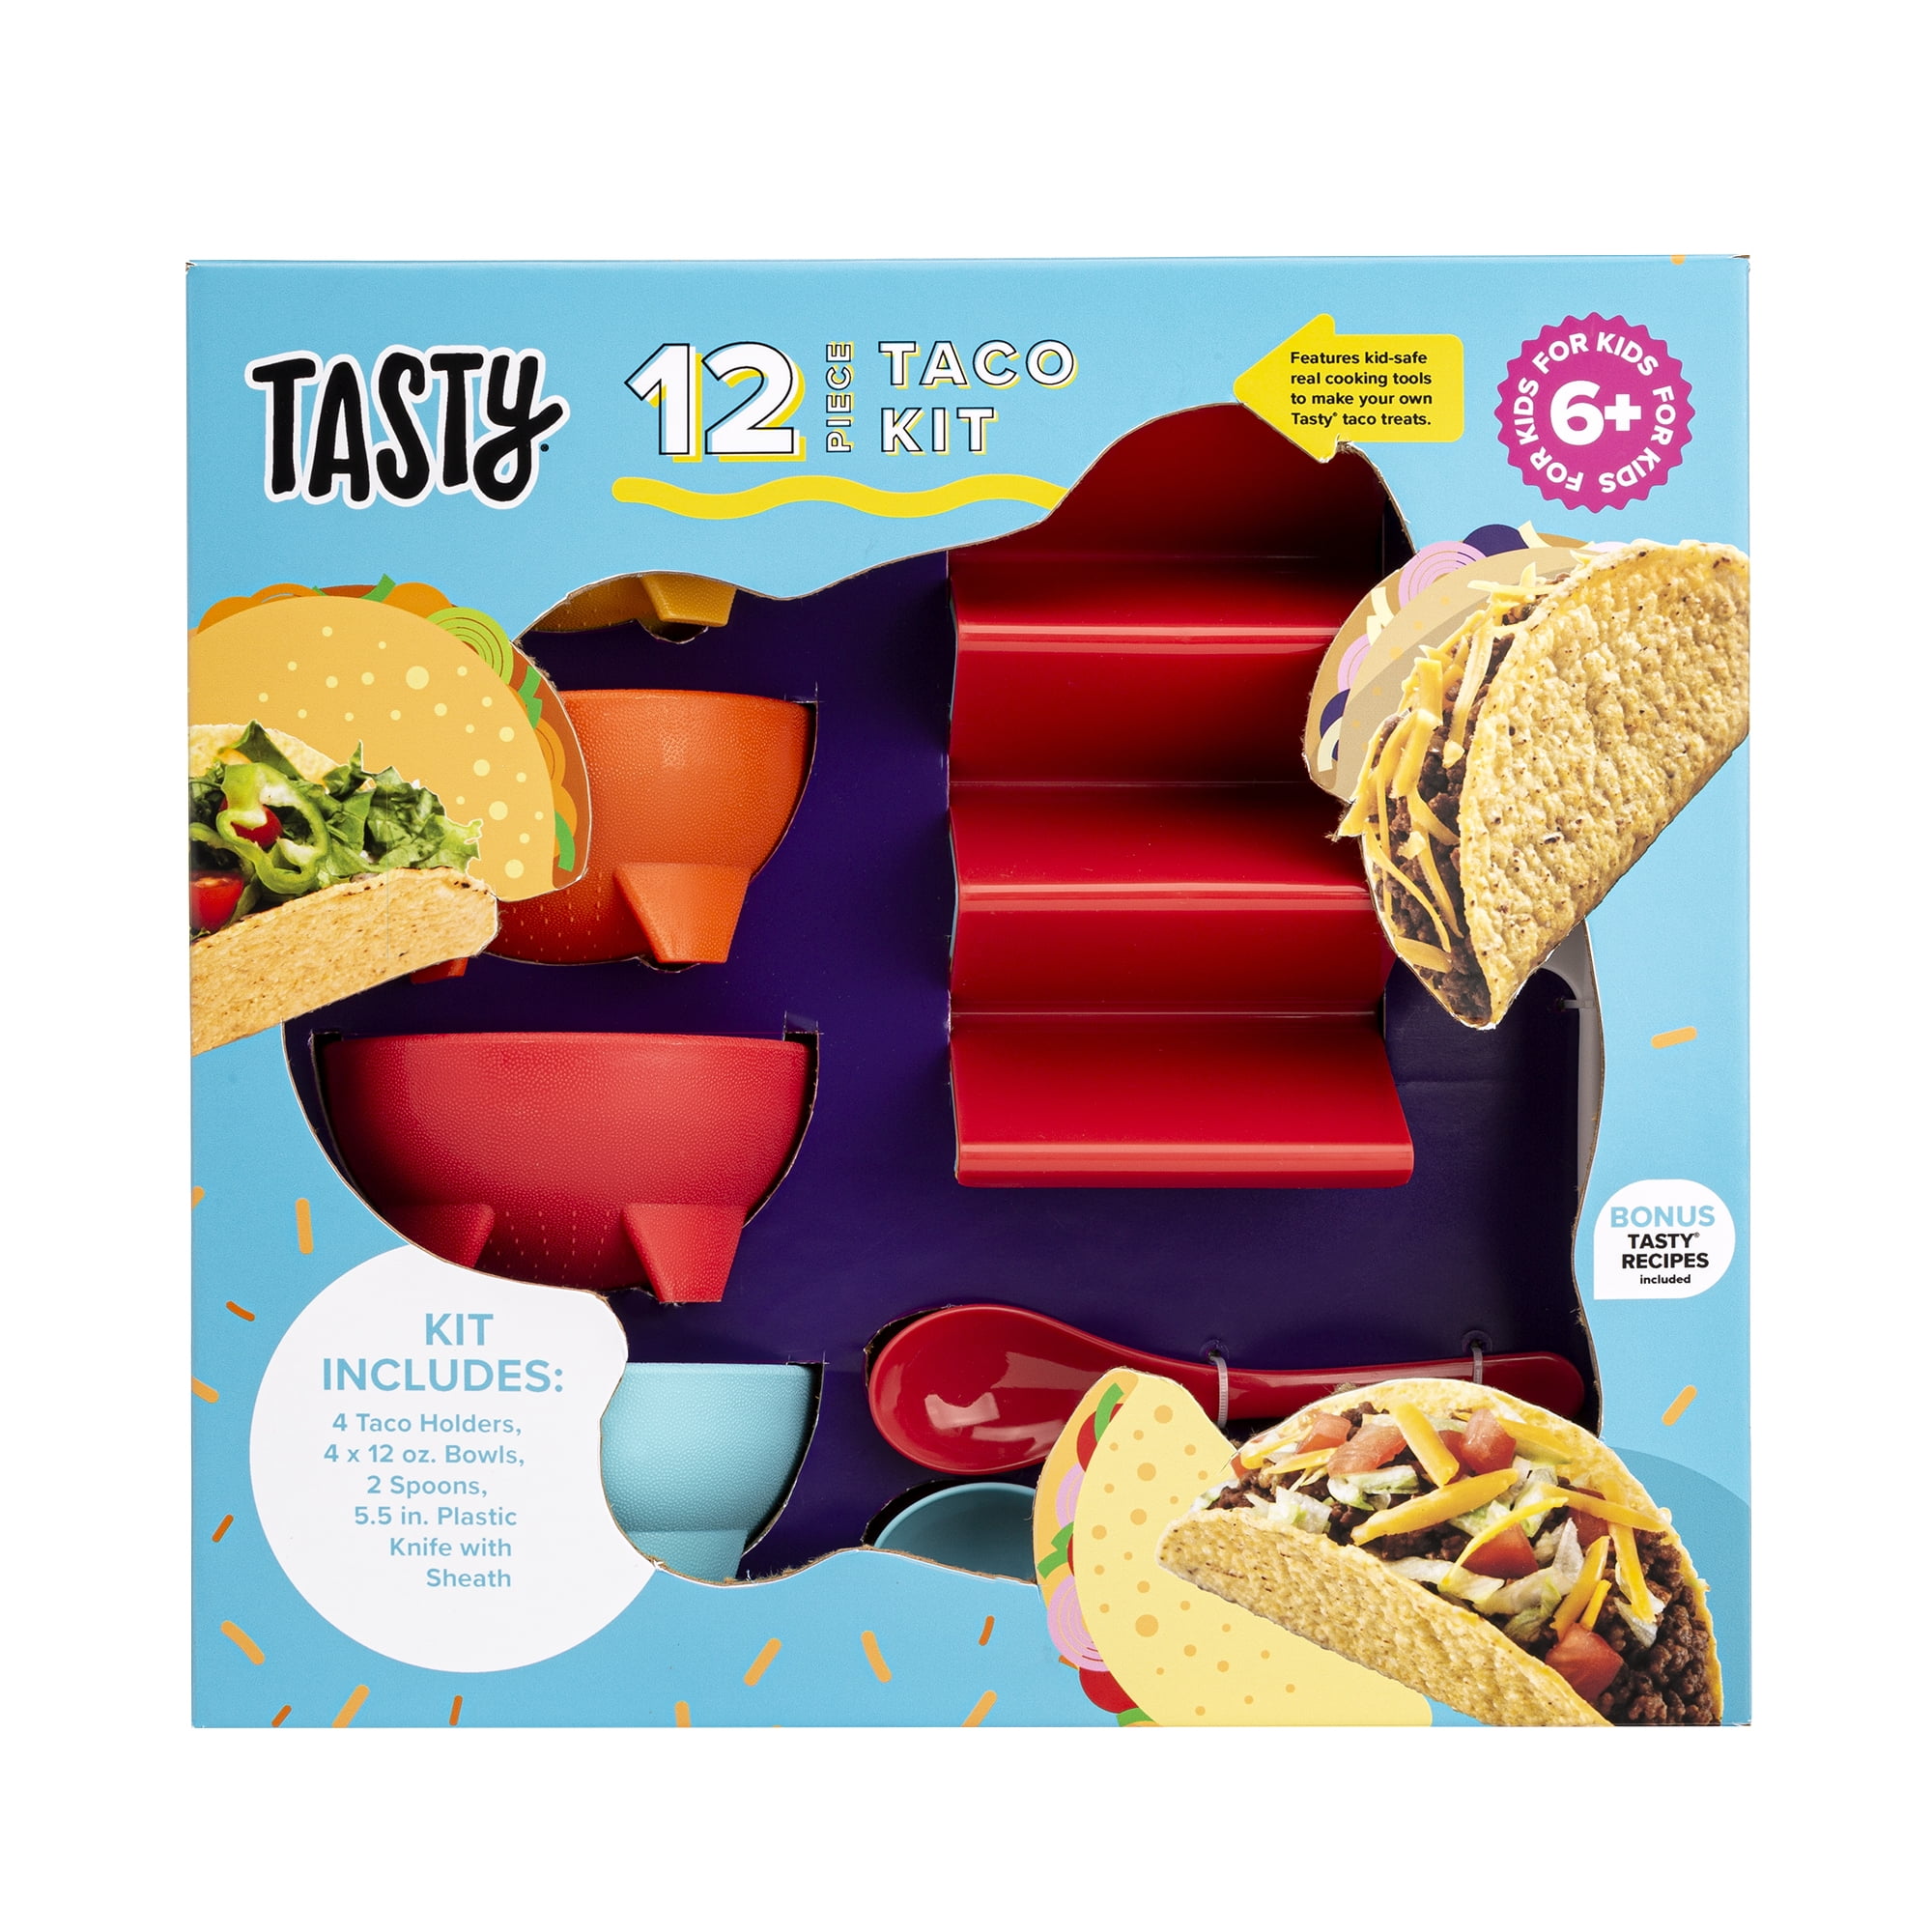 Plus 2 Bonus Taco Recipes Included Napkins | Tortilla Warmer 4 Taco Tuesday Bundle Taco Holder 